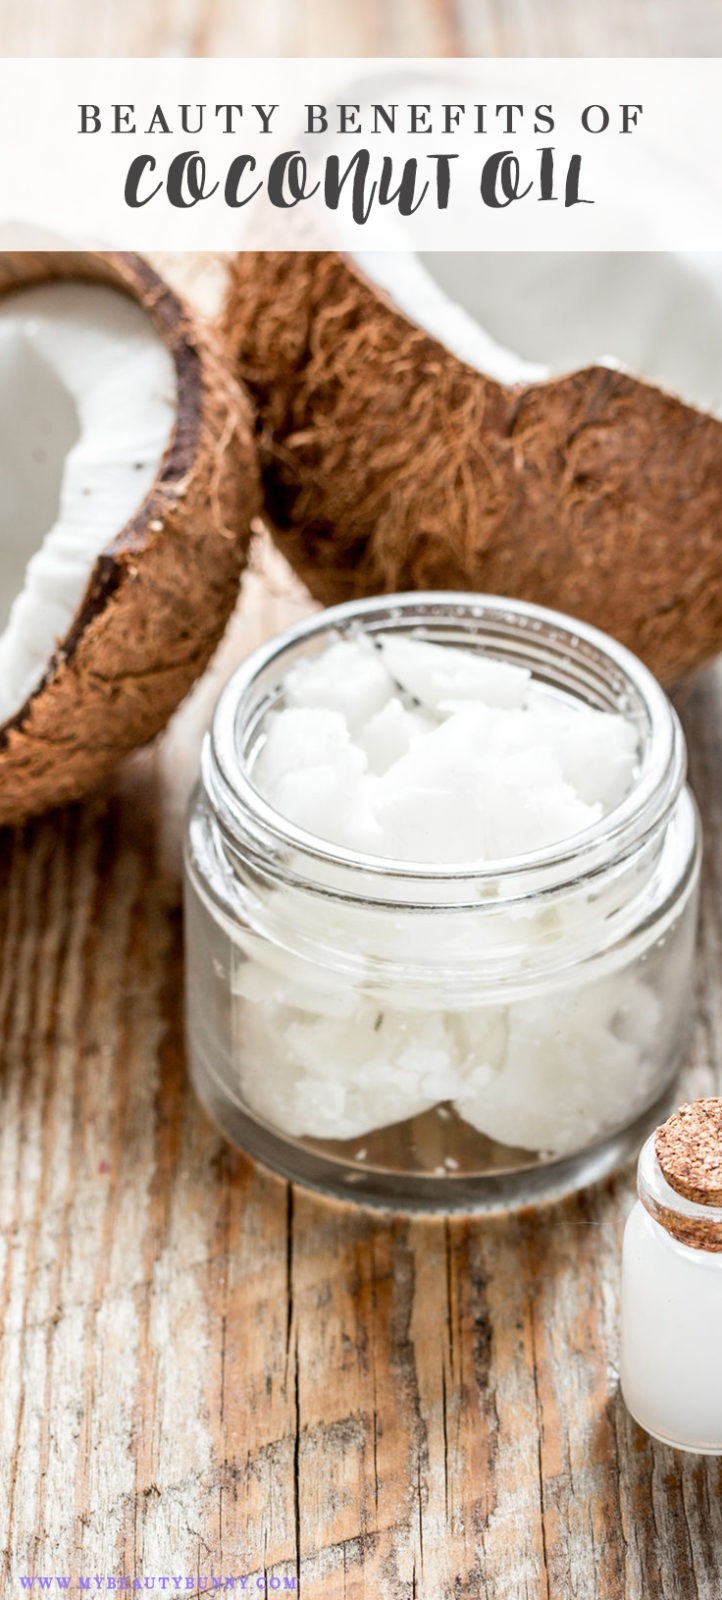 Beauty Benefits of Coconut Oil